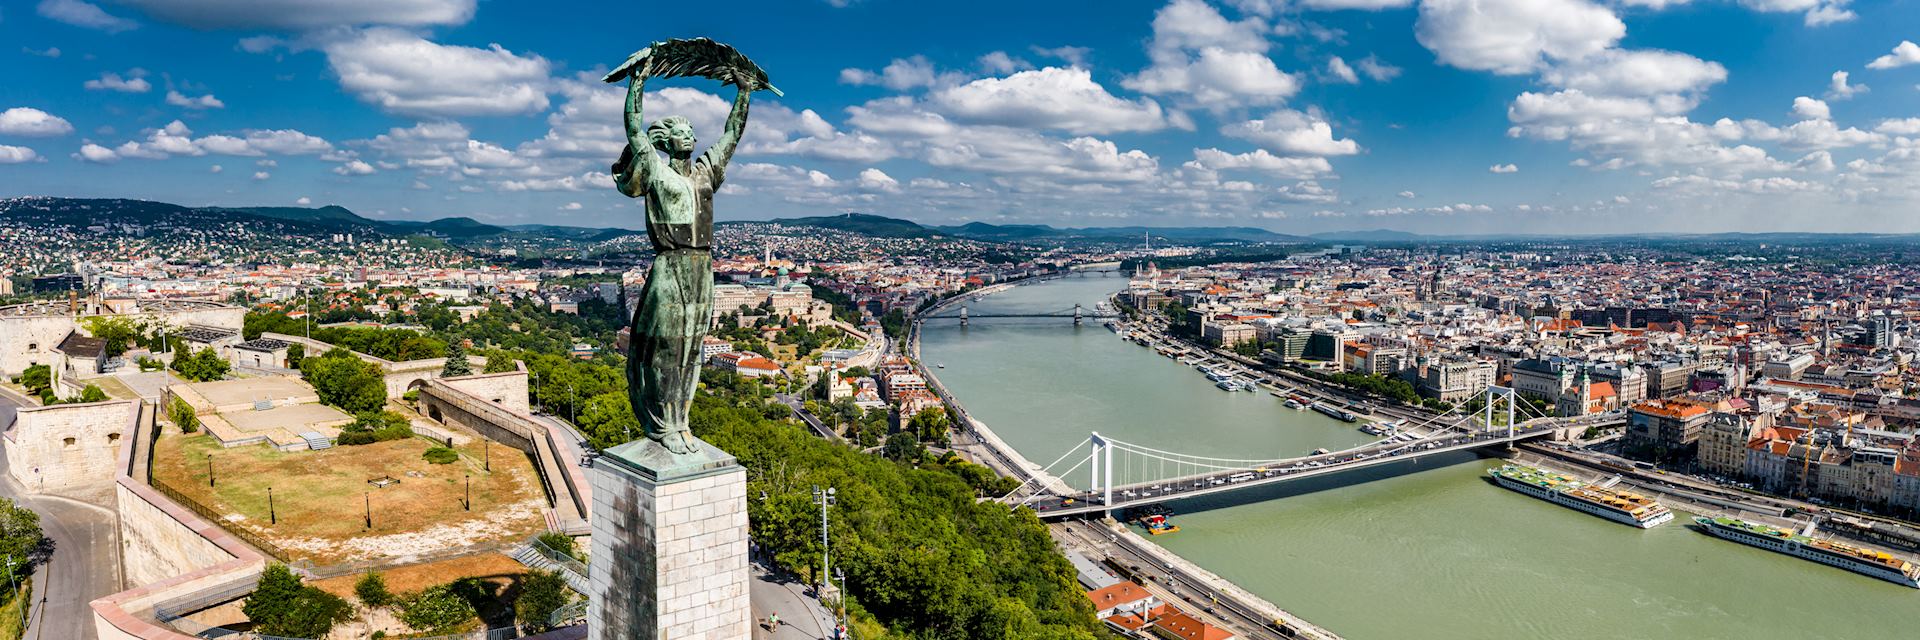 Statue of Liberty, Budapest